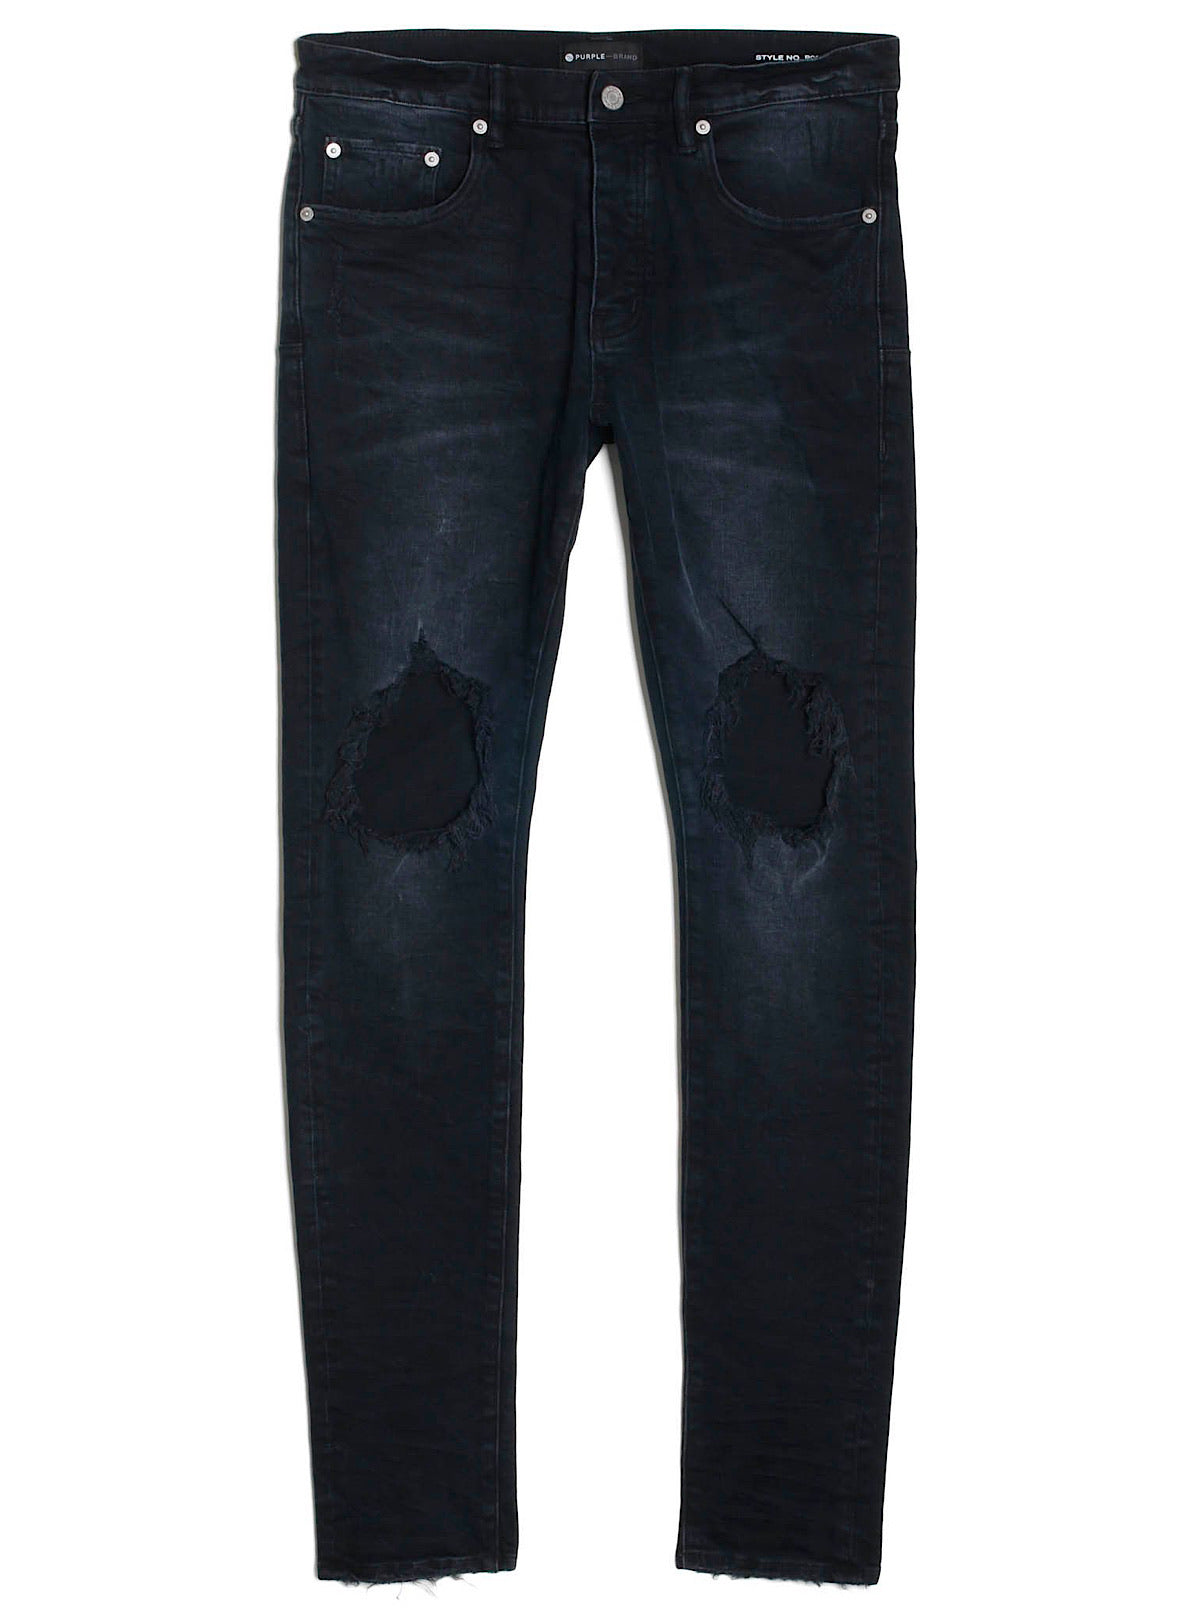 Black purple brand jeans  Jeans brands, Purple jeans, Comfortable jeans